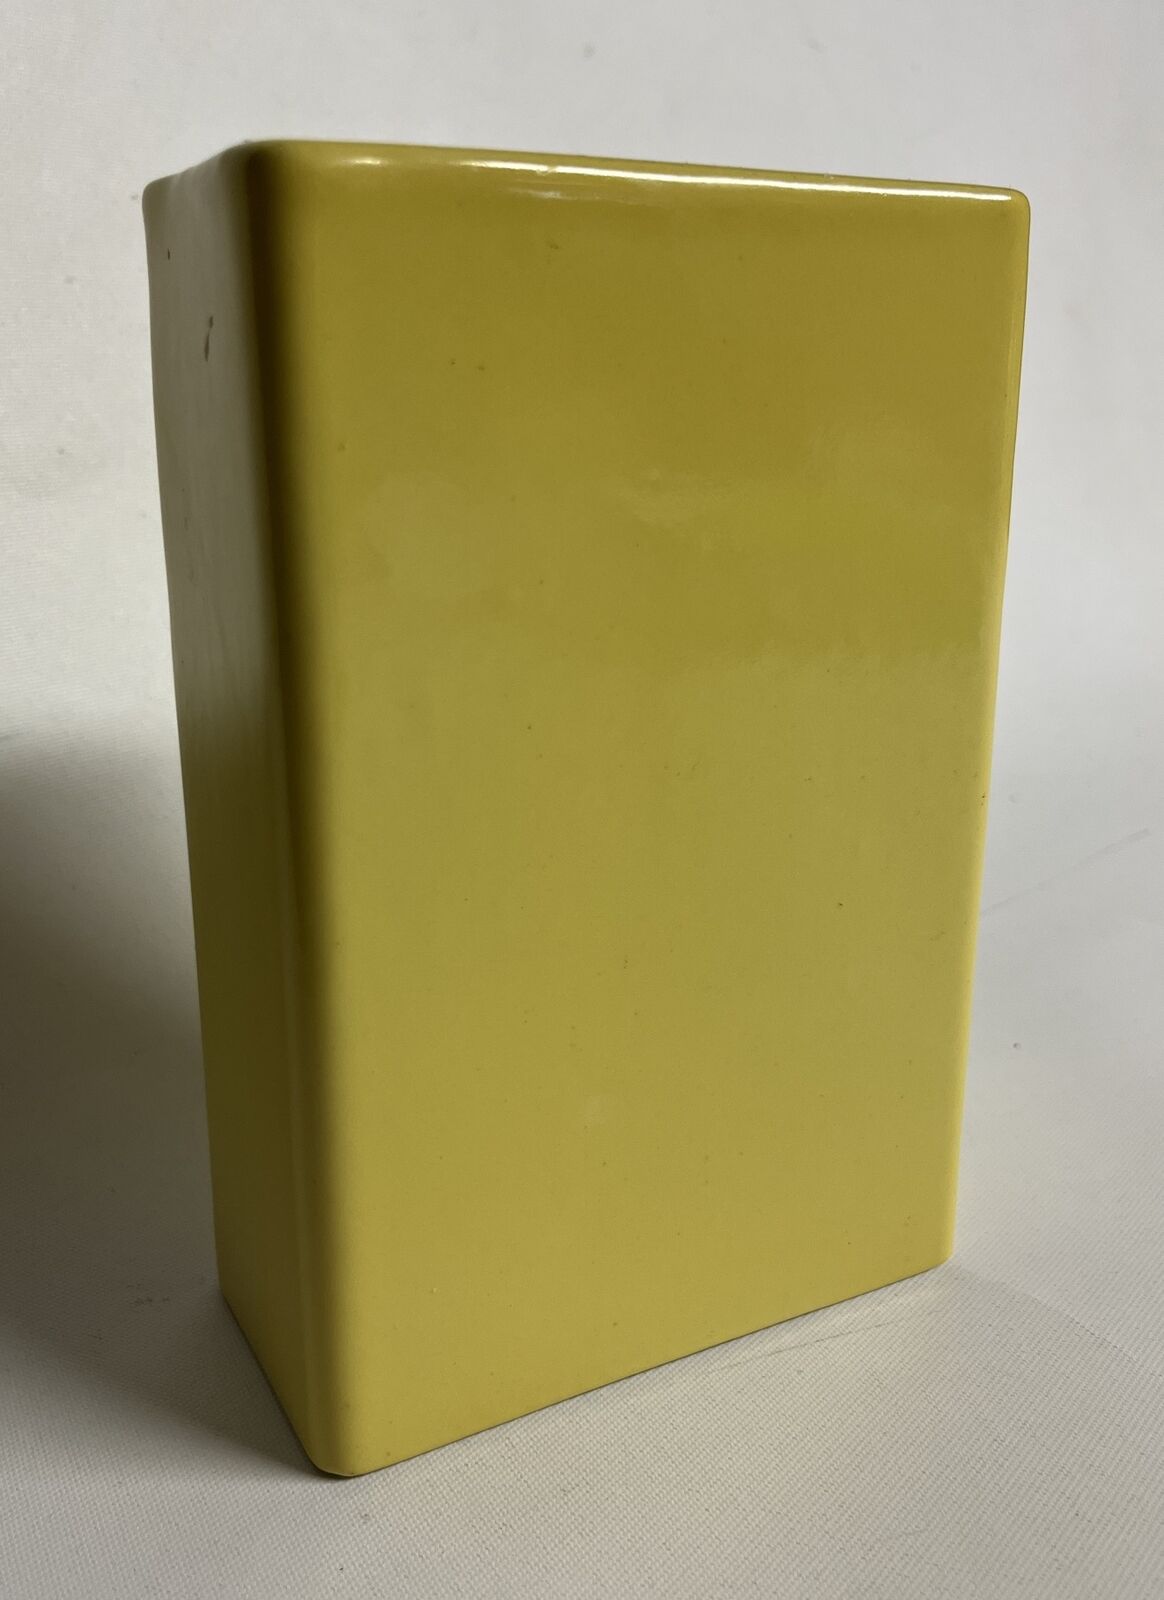 Vintage Abingdon Pottery Yellow Square Rectangle Vase Planter #577 Ceramic MCM